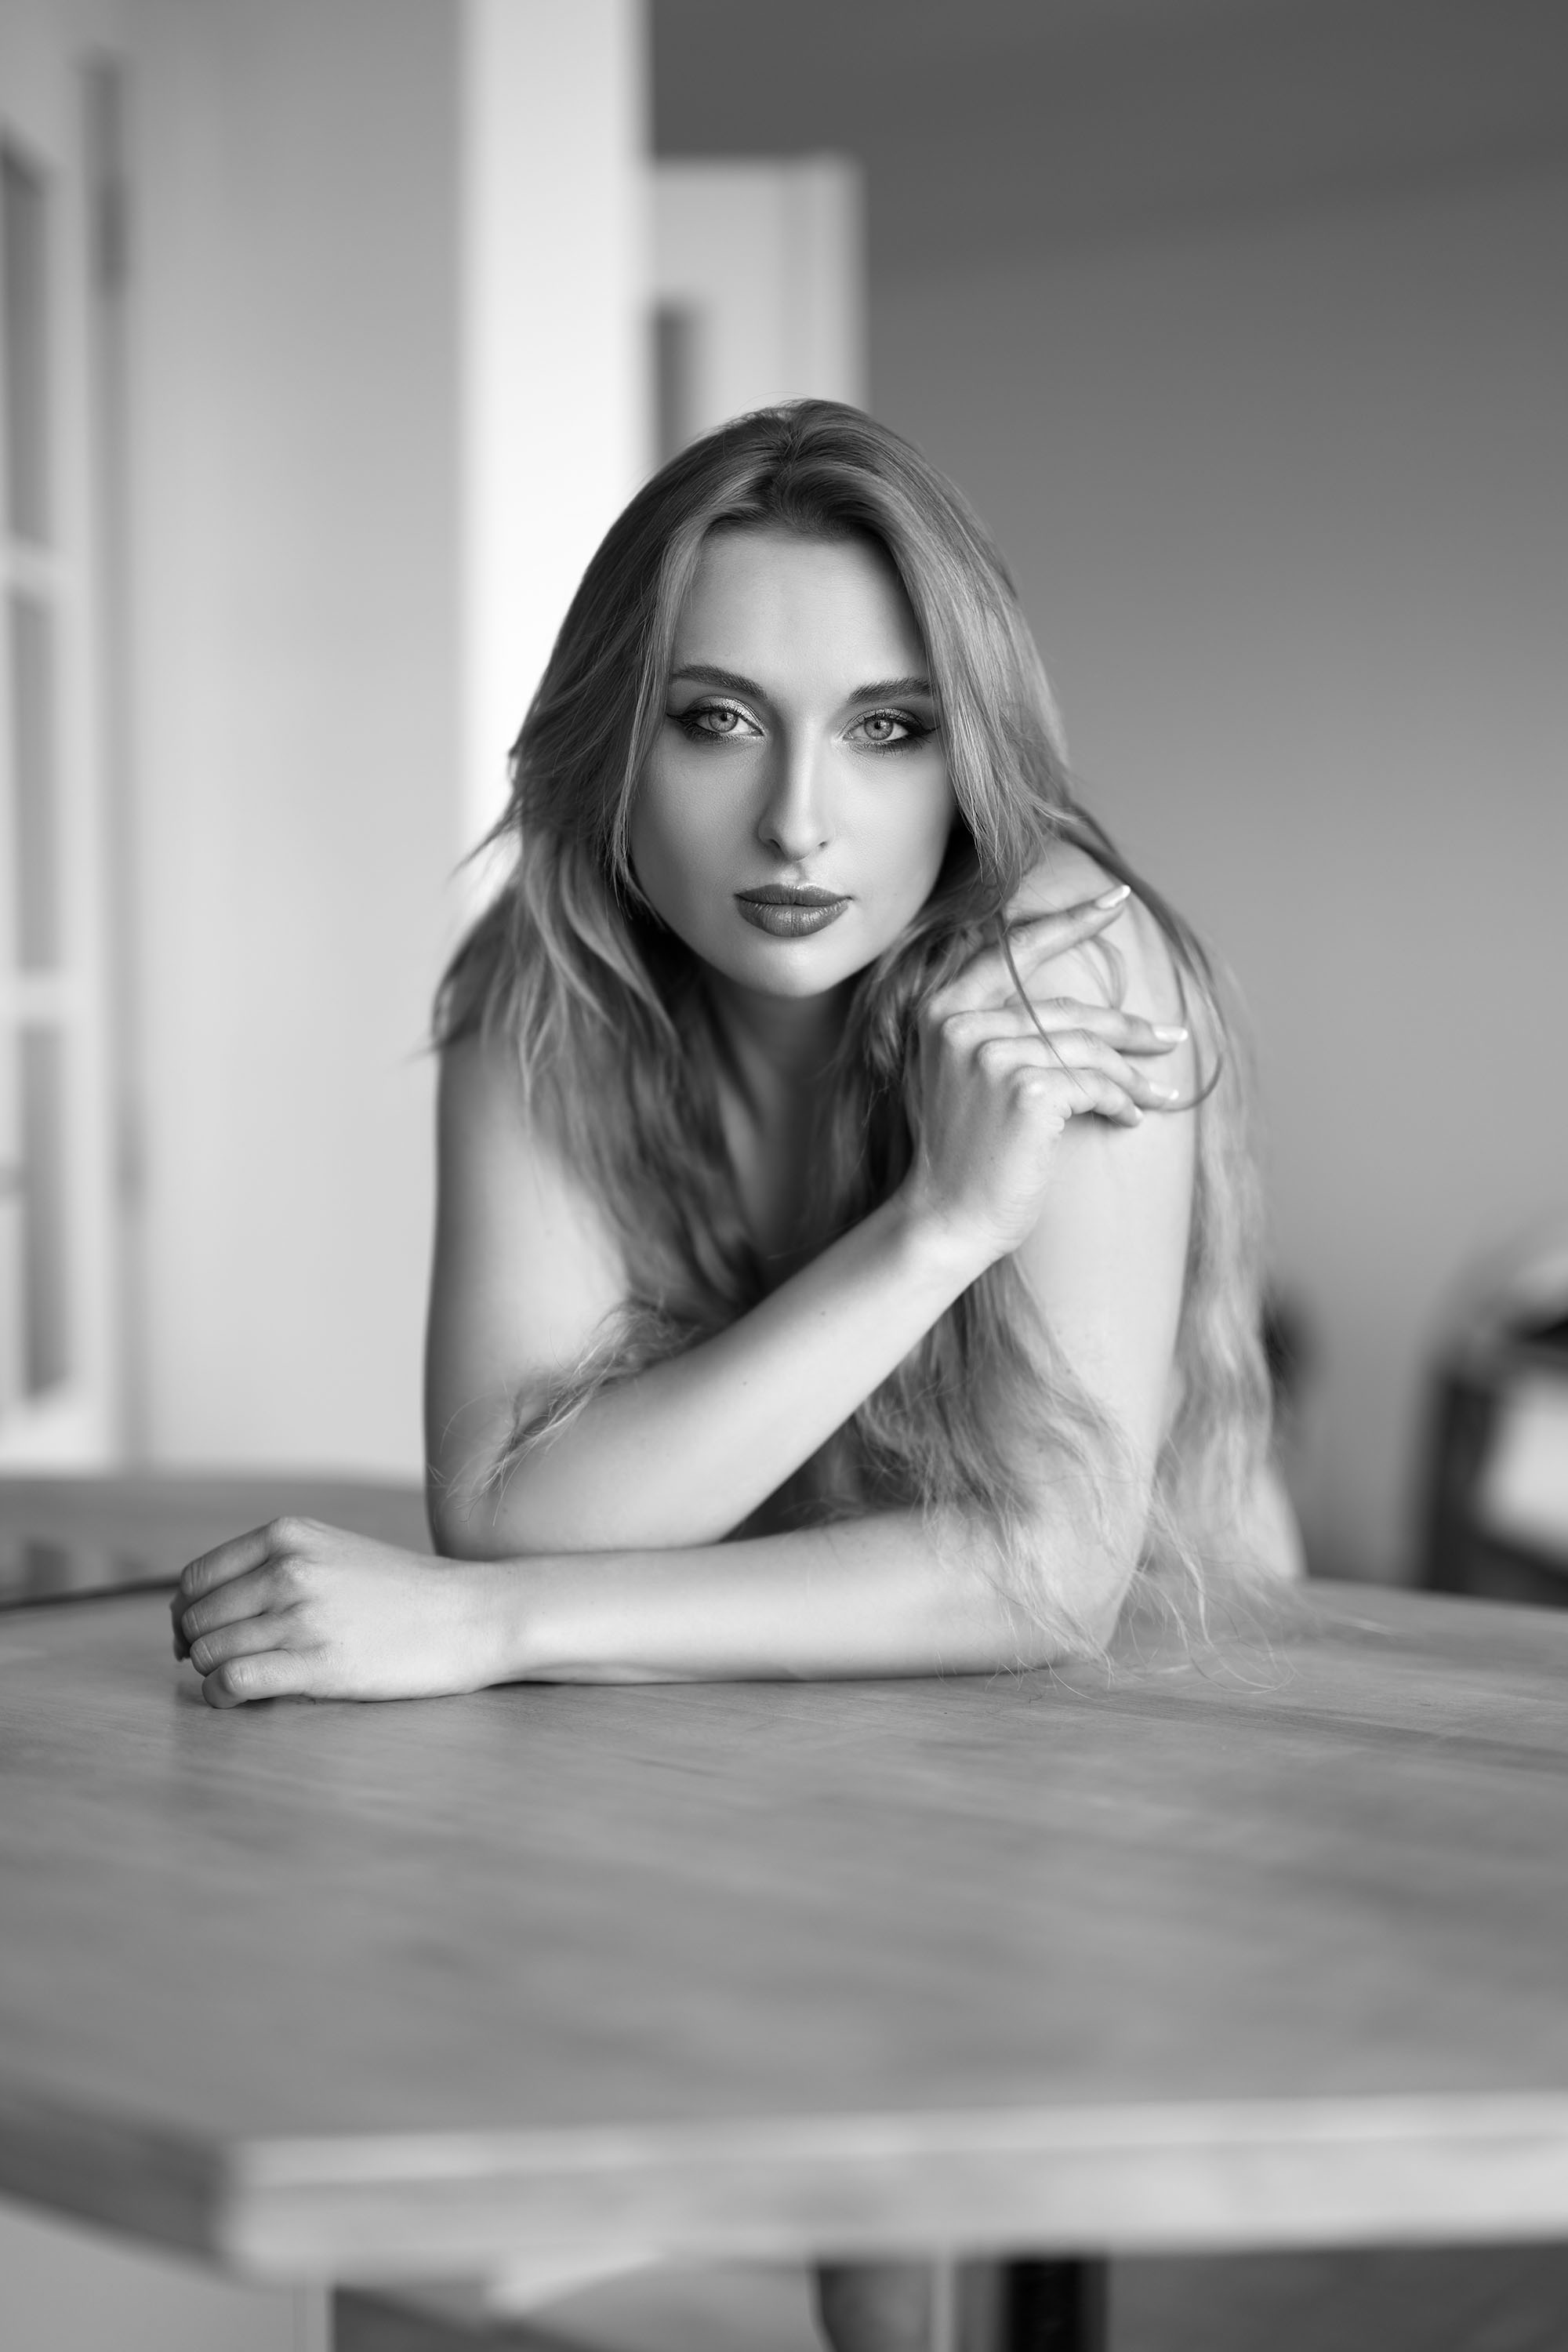 Poetic Minx - Aurora Sprengel, model from Poland at a boudoir photoshoot